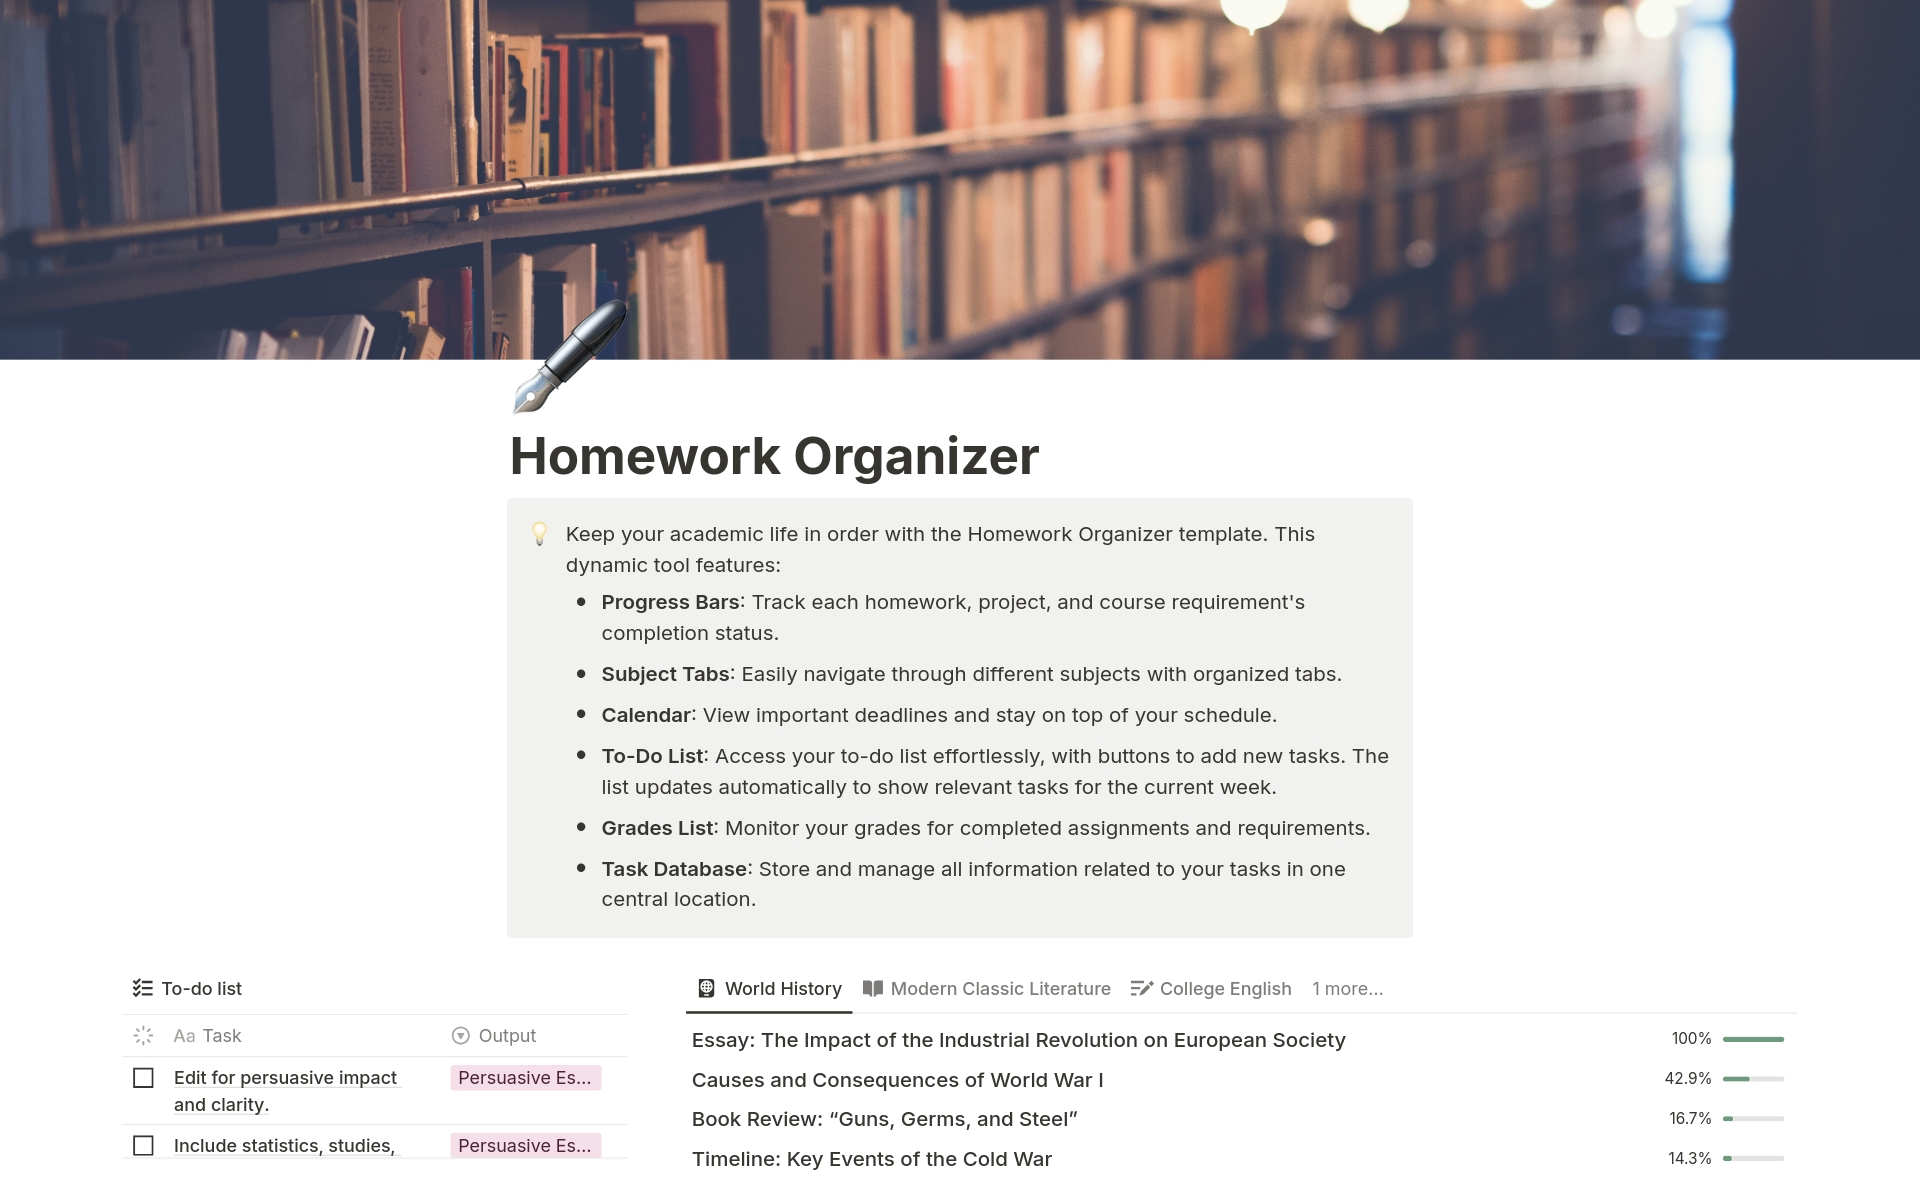 Vista previa de una plantilla para Homework Organizer